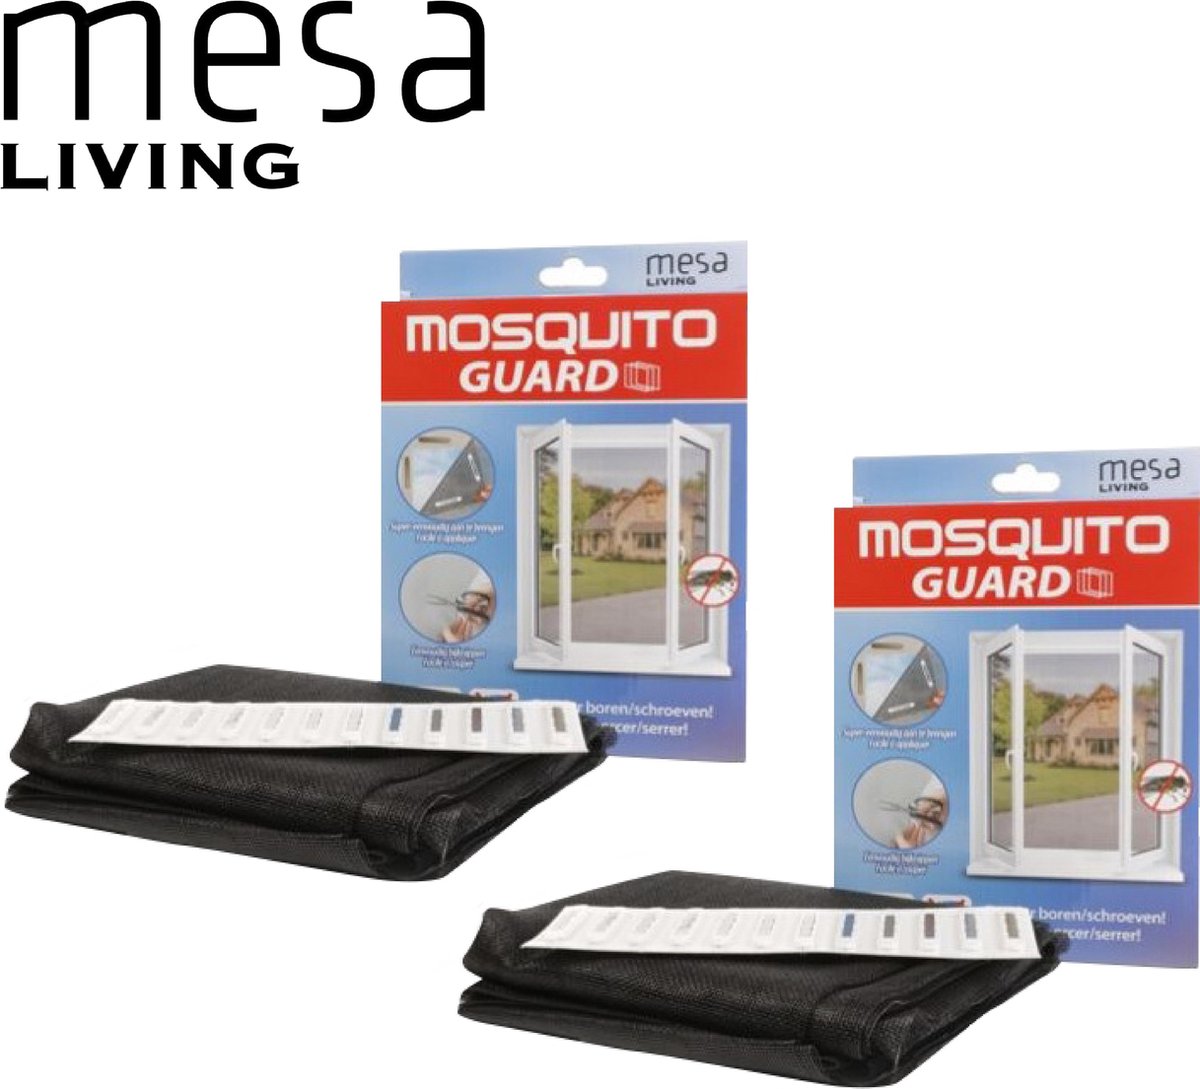 Mesa Living Mosquito Guard - set of 2